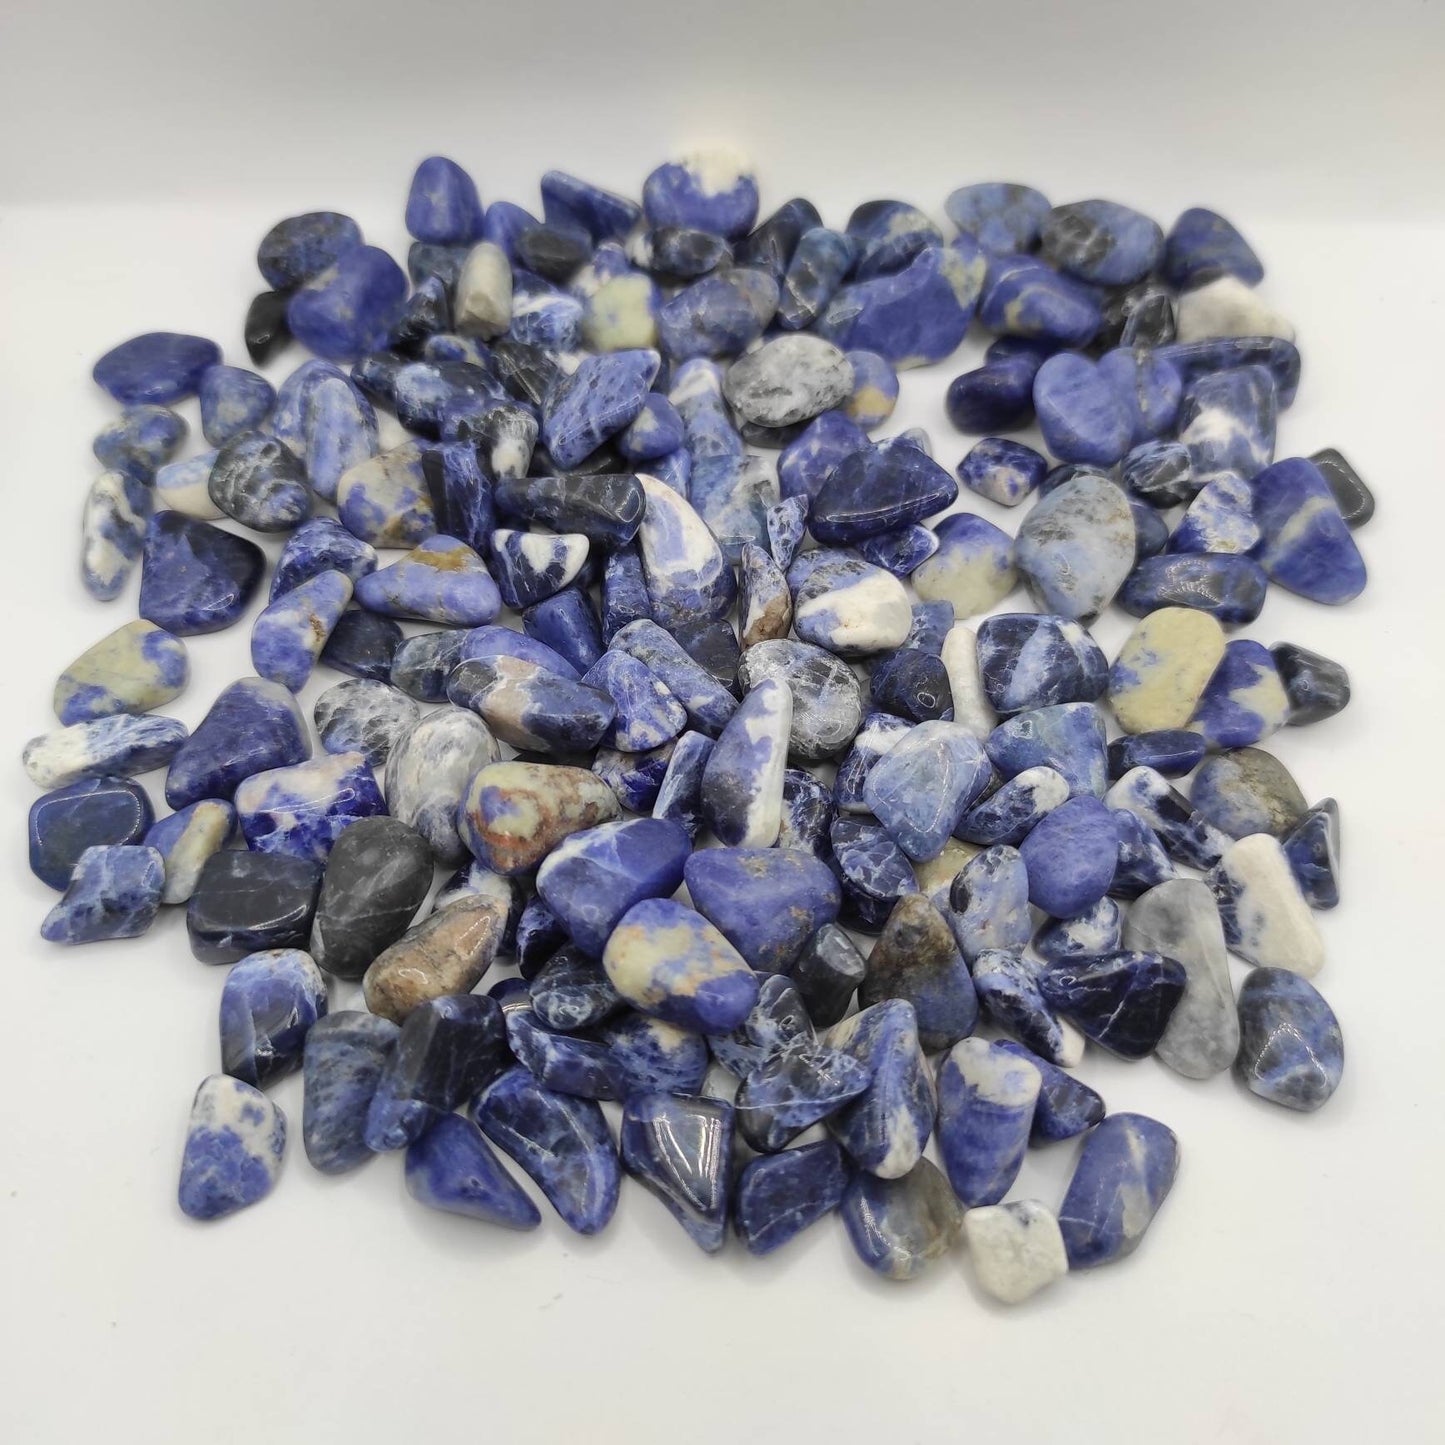 228g Unique Lot of Sodalite Gravel 8-18mm Polished Blue Sodalite Tumbled Stones Natural India Sodalite Loose Gemstones Crystal Gravel